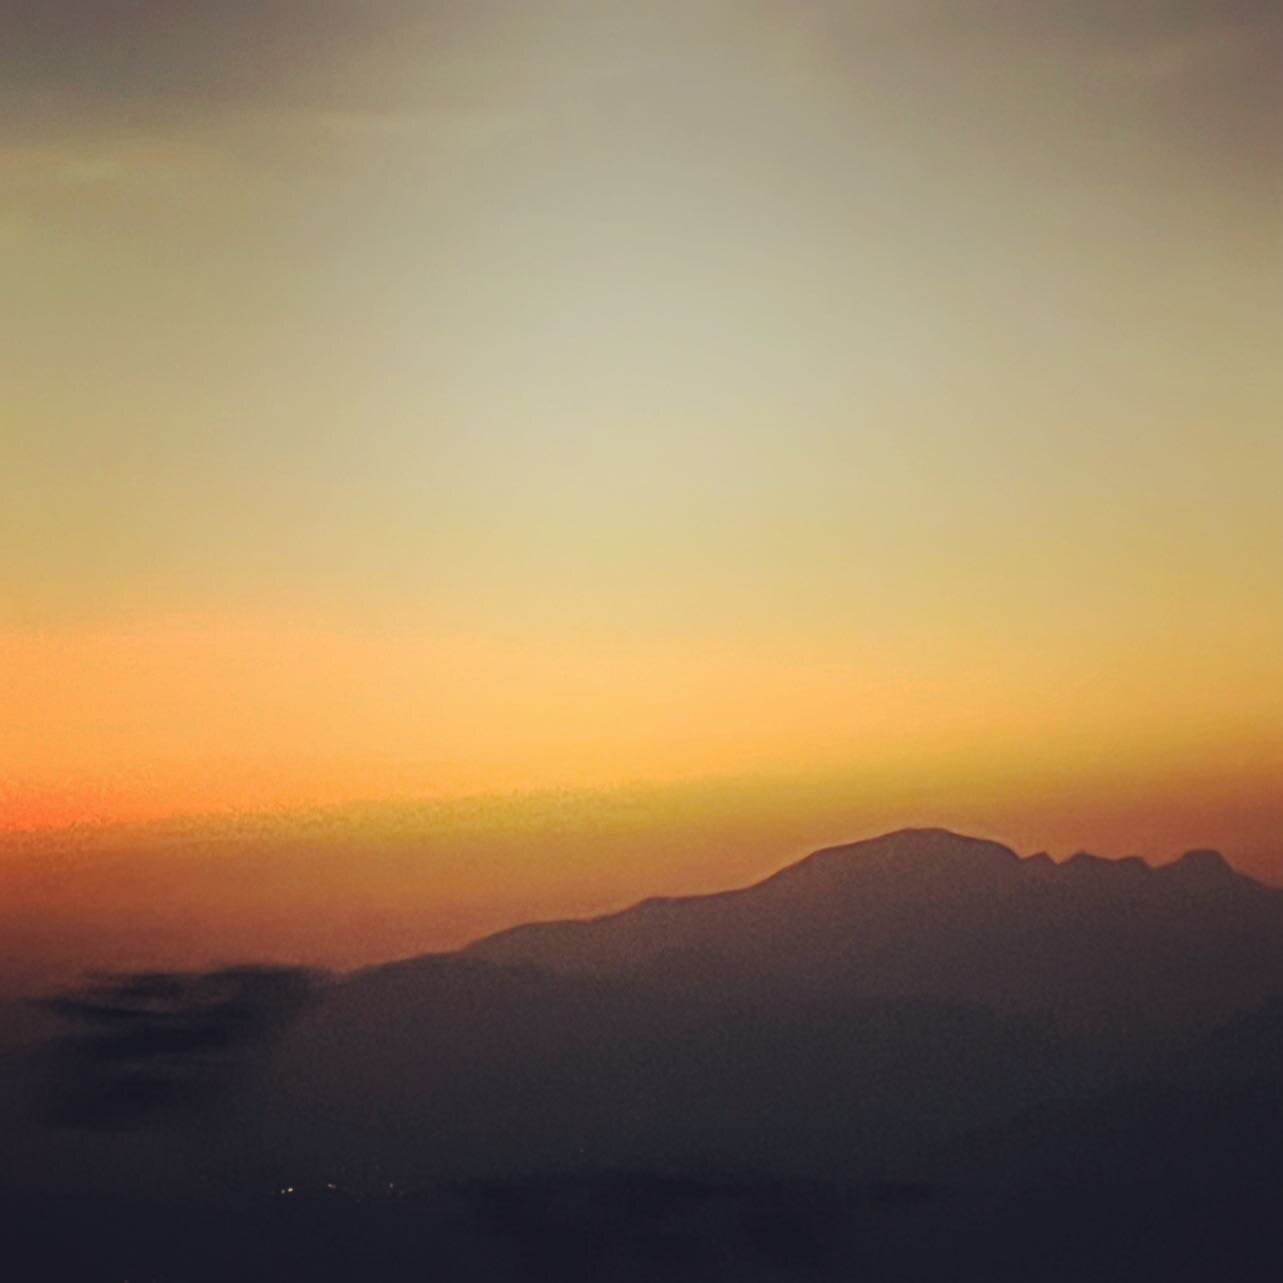 ...::SUNSET::..
.
.
#sunset #chase #orange #mountains #raigad #fort #travel #sky #blue #india #2023 #pictureoftheday #likeforlikes #nature #travelphotography #happy #green #mountains #solo_travel_er #shotoniphone